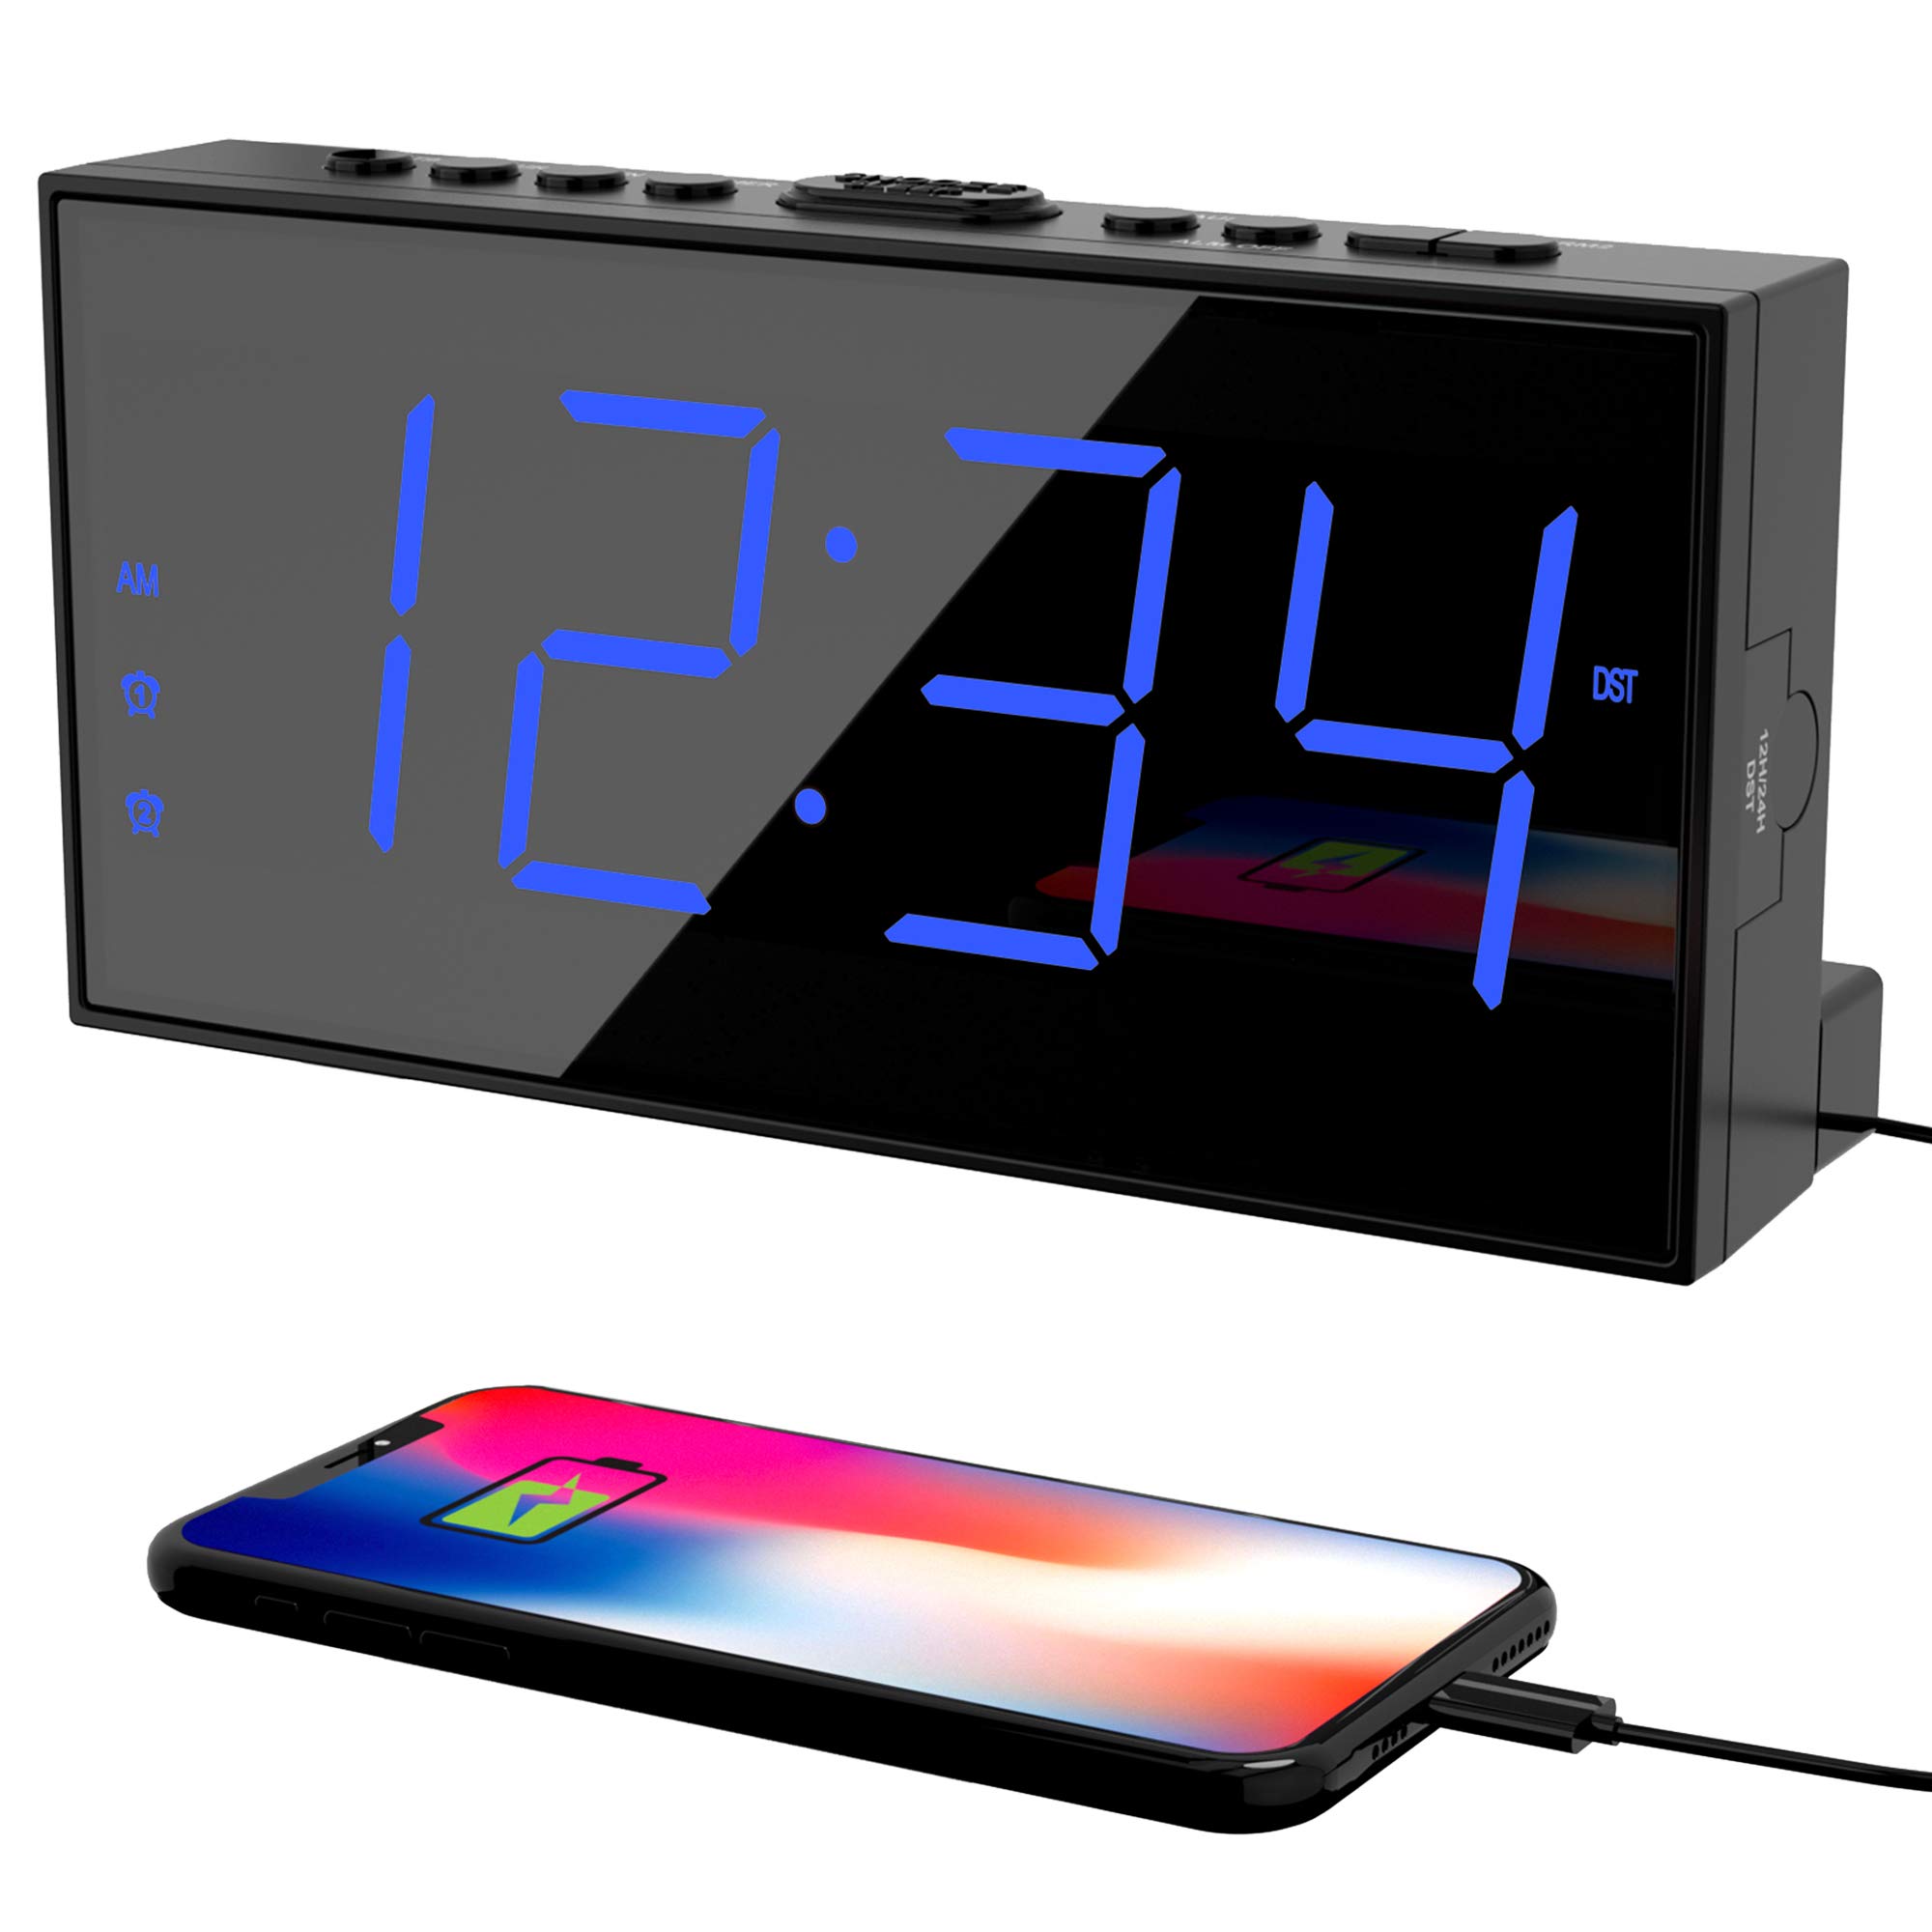 PPLEE Digital Dual Alarm Clock for Bedroom